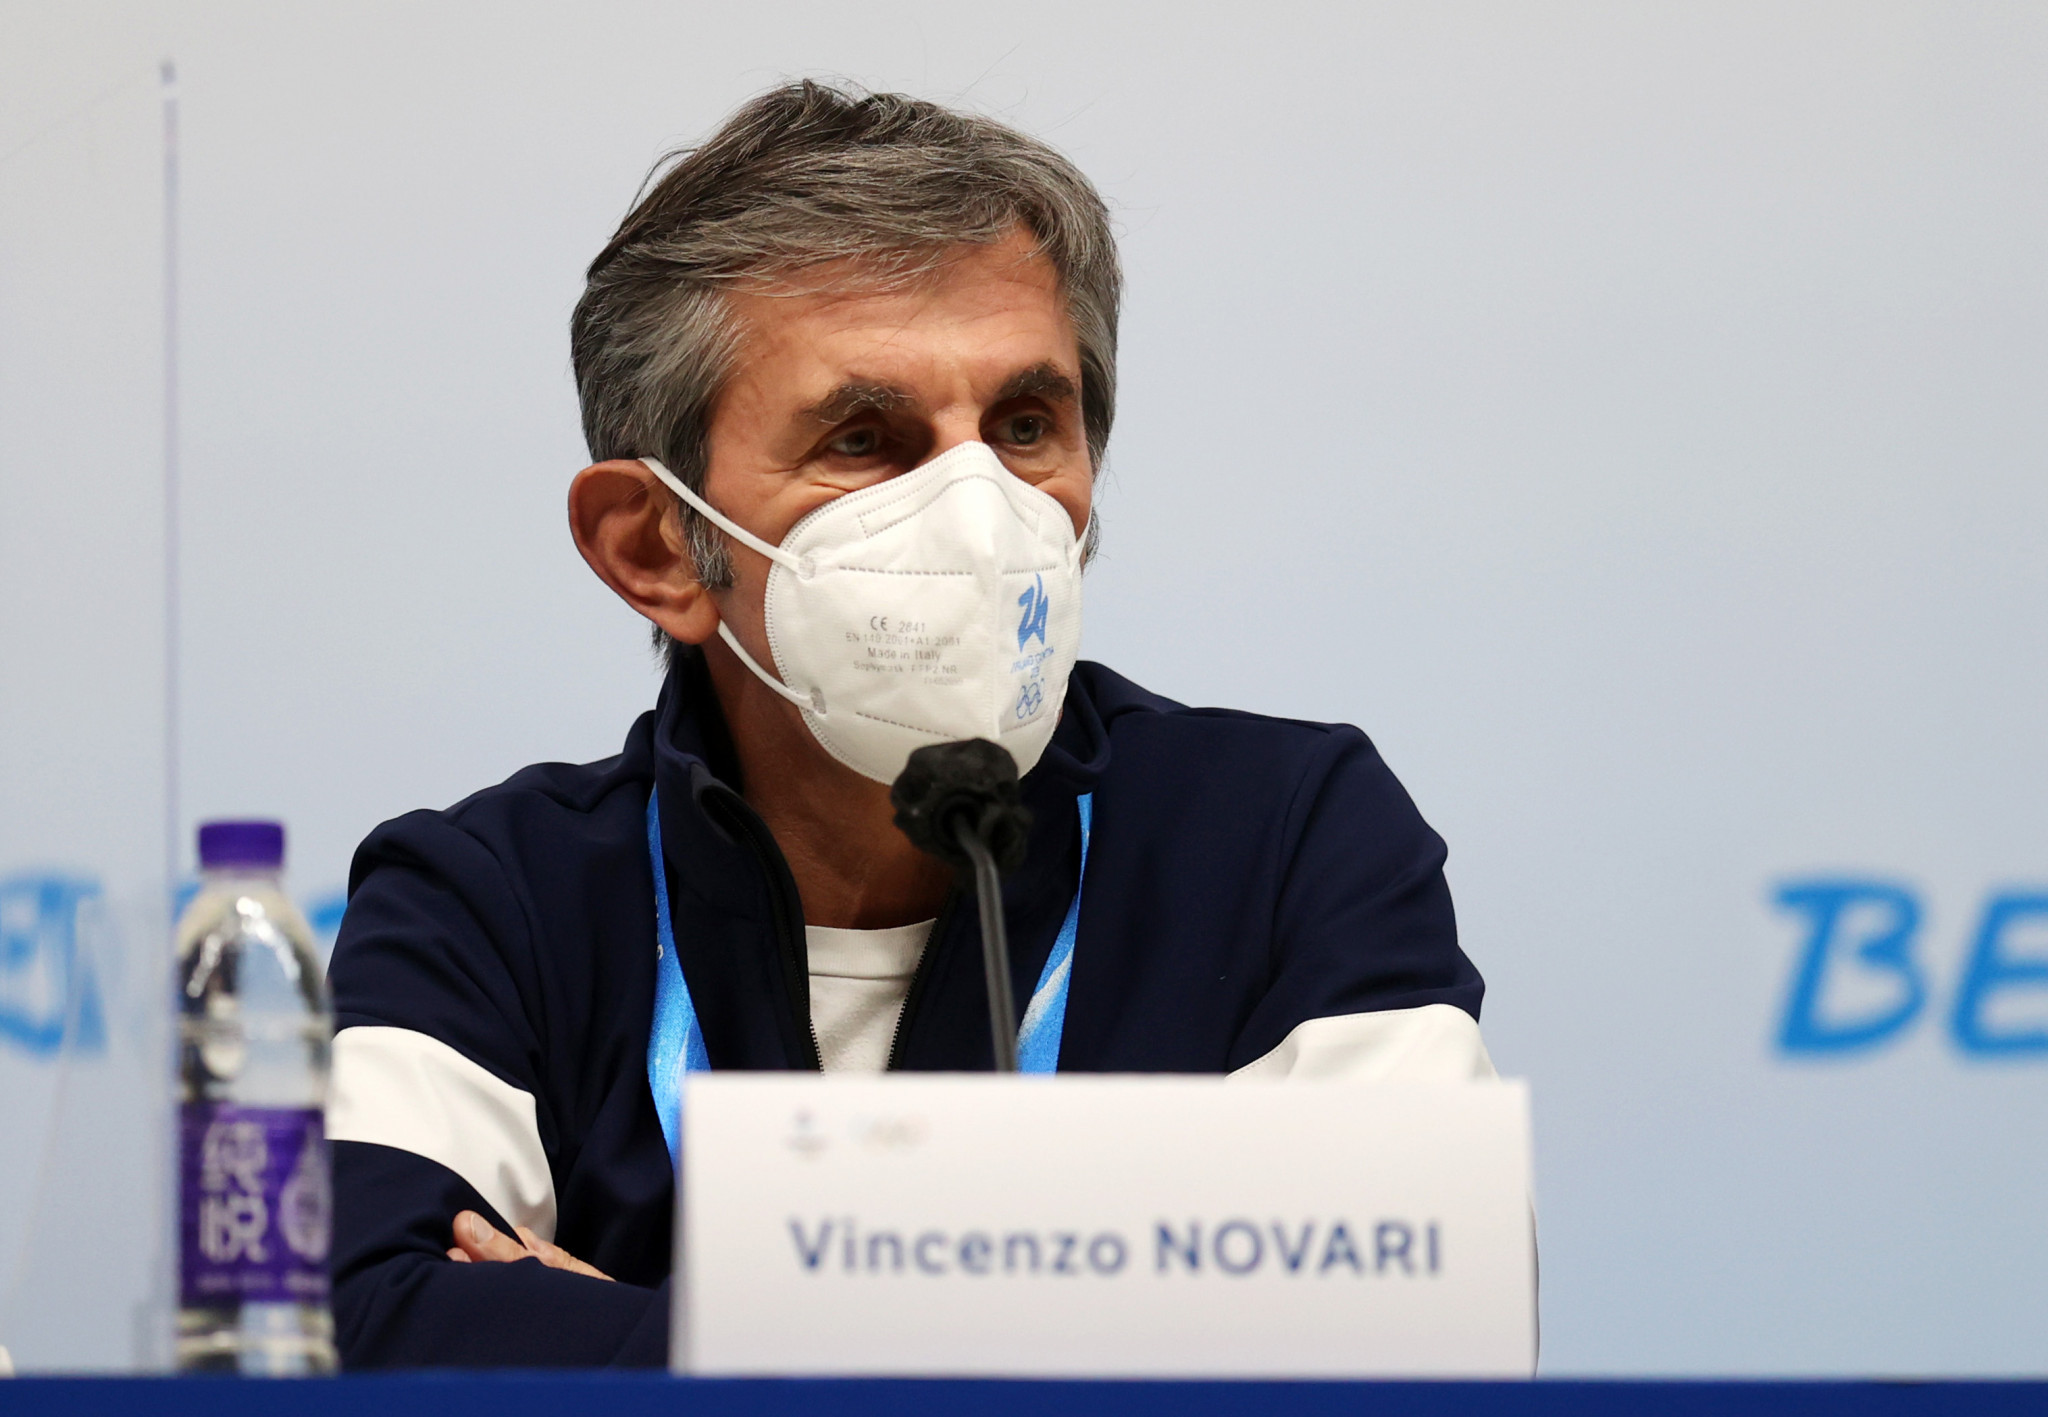 Milan Cortina 2026 Organising Committee chief executive Novari expected to step down 